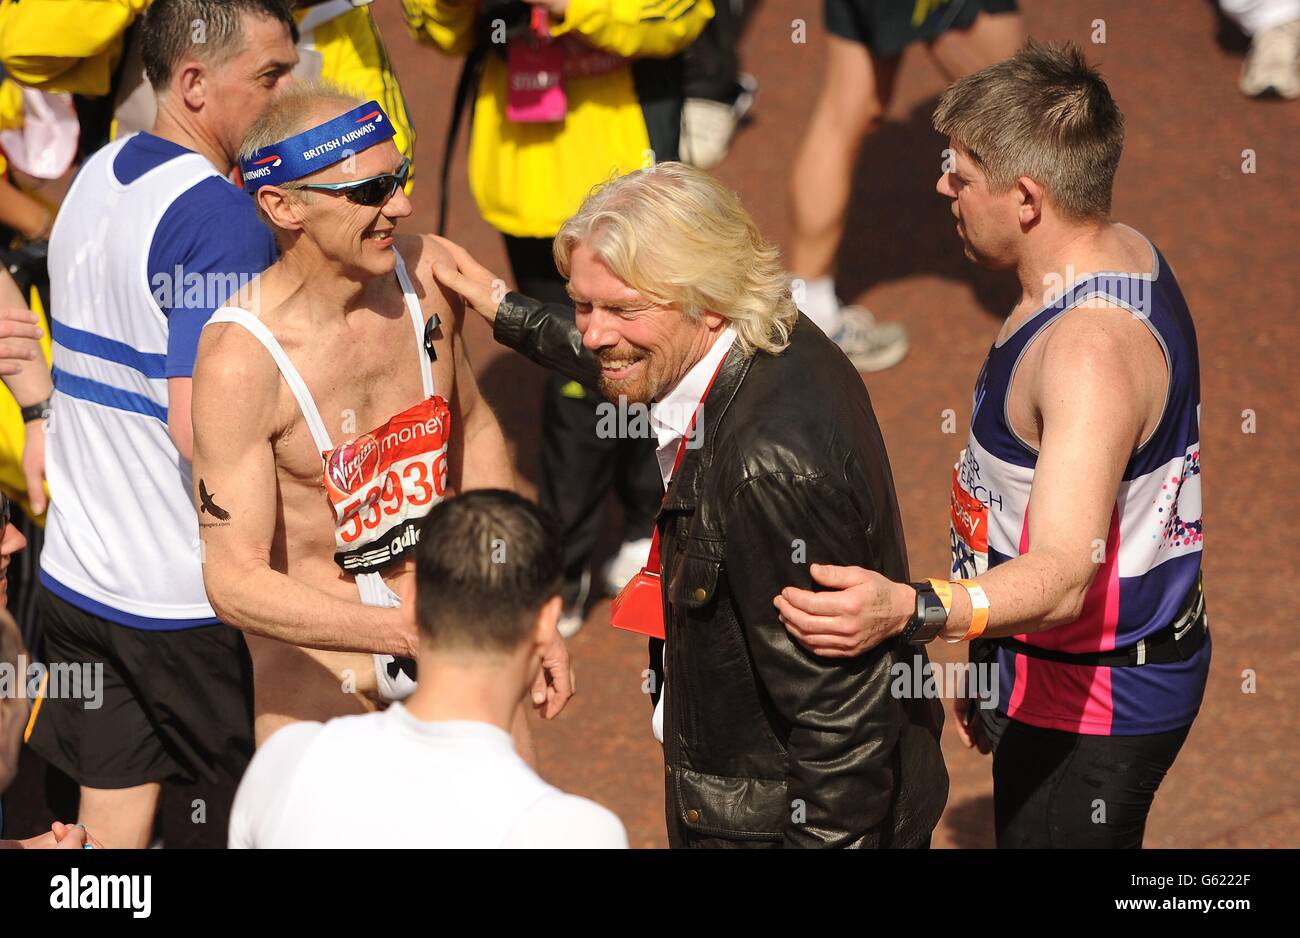 Sir Richard Branson congratulates runners during the Virgin London Marathon in London. Stock Photo